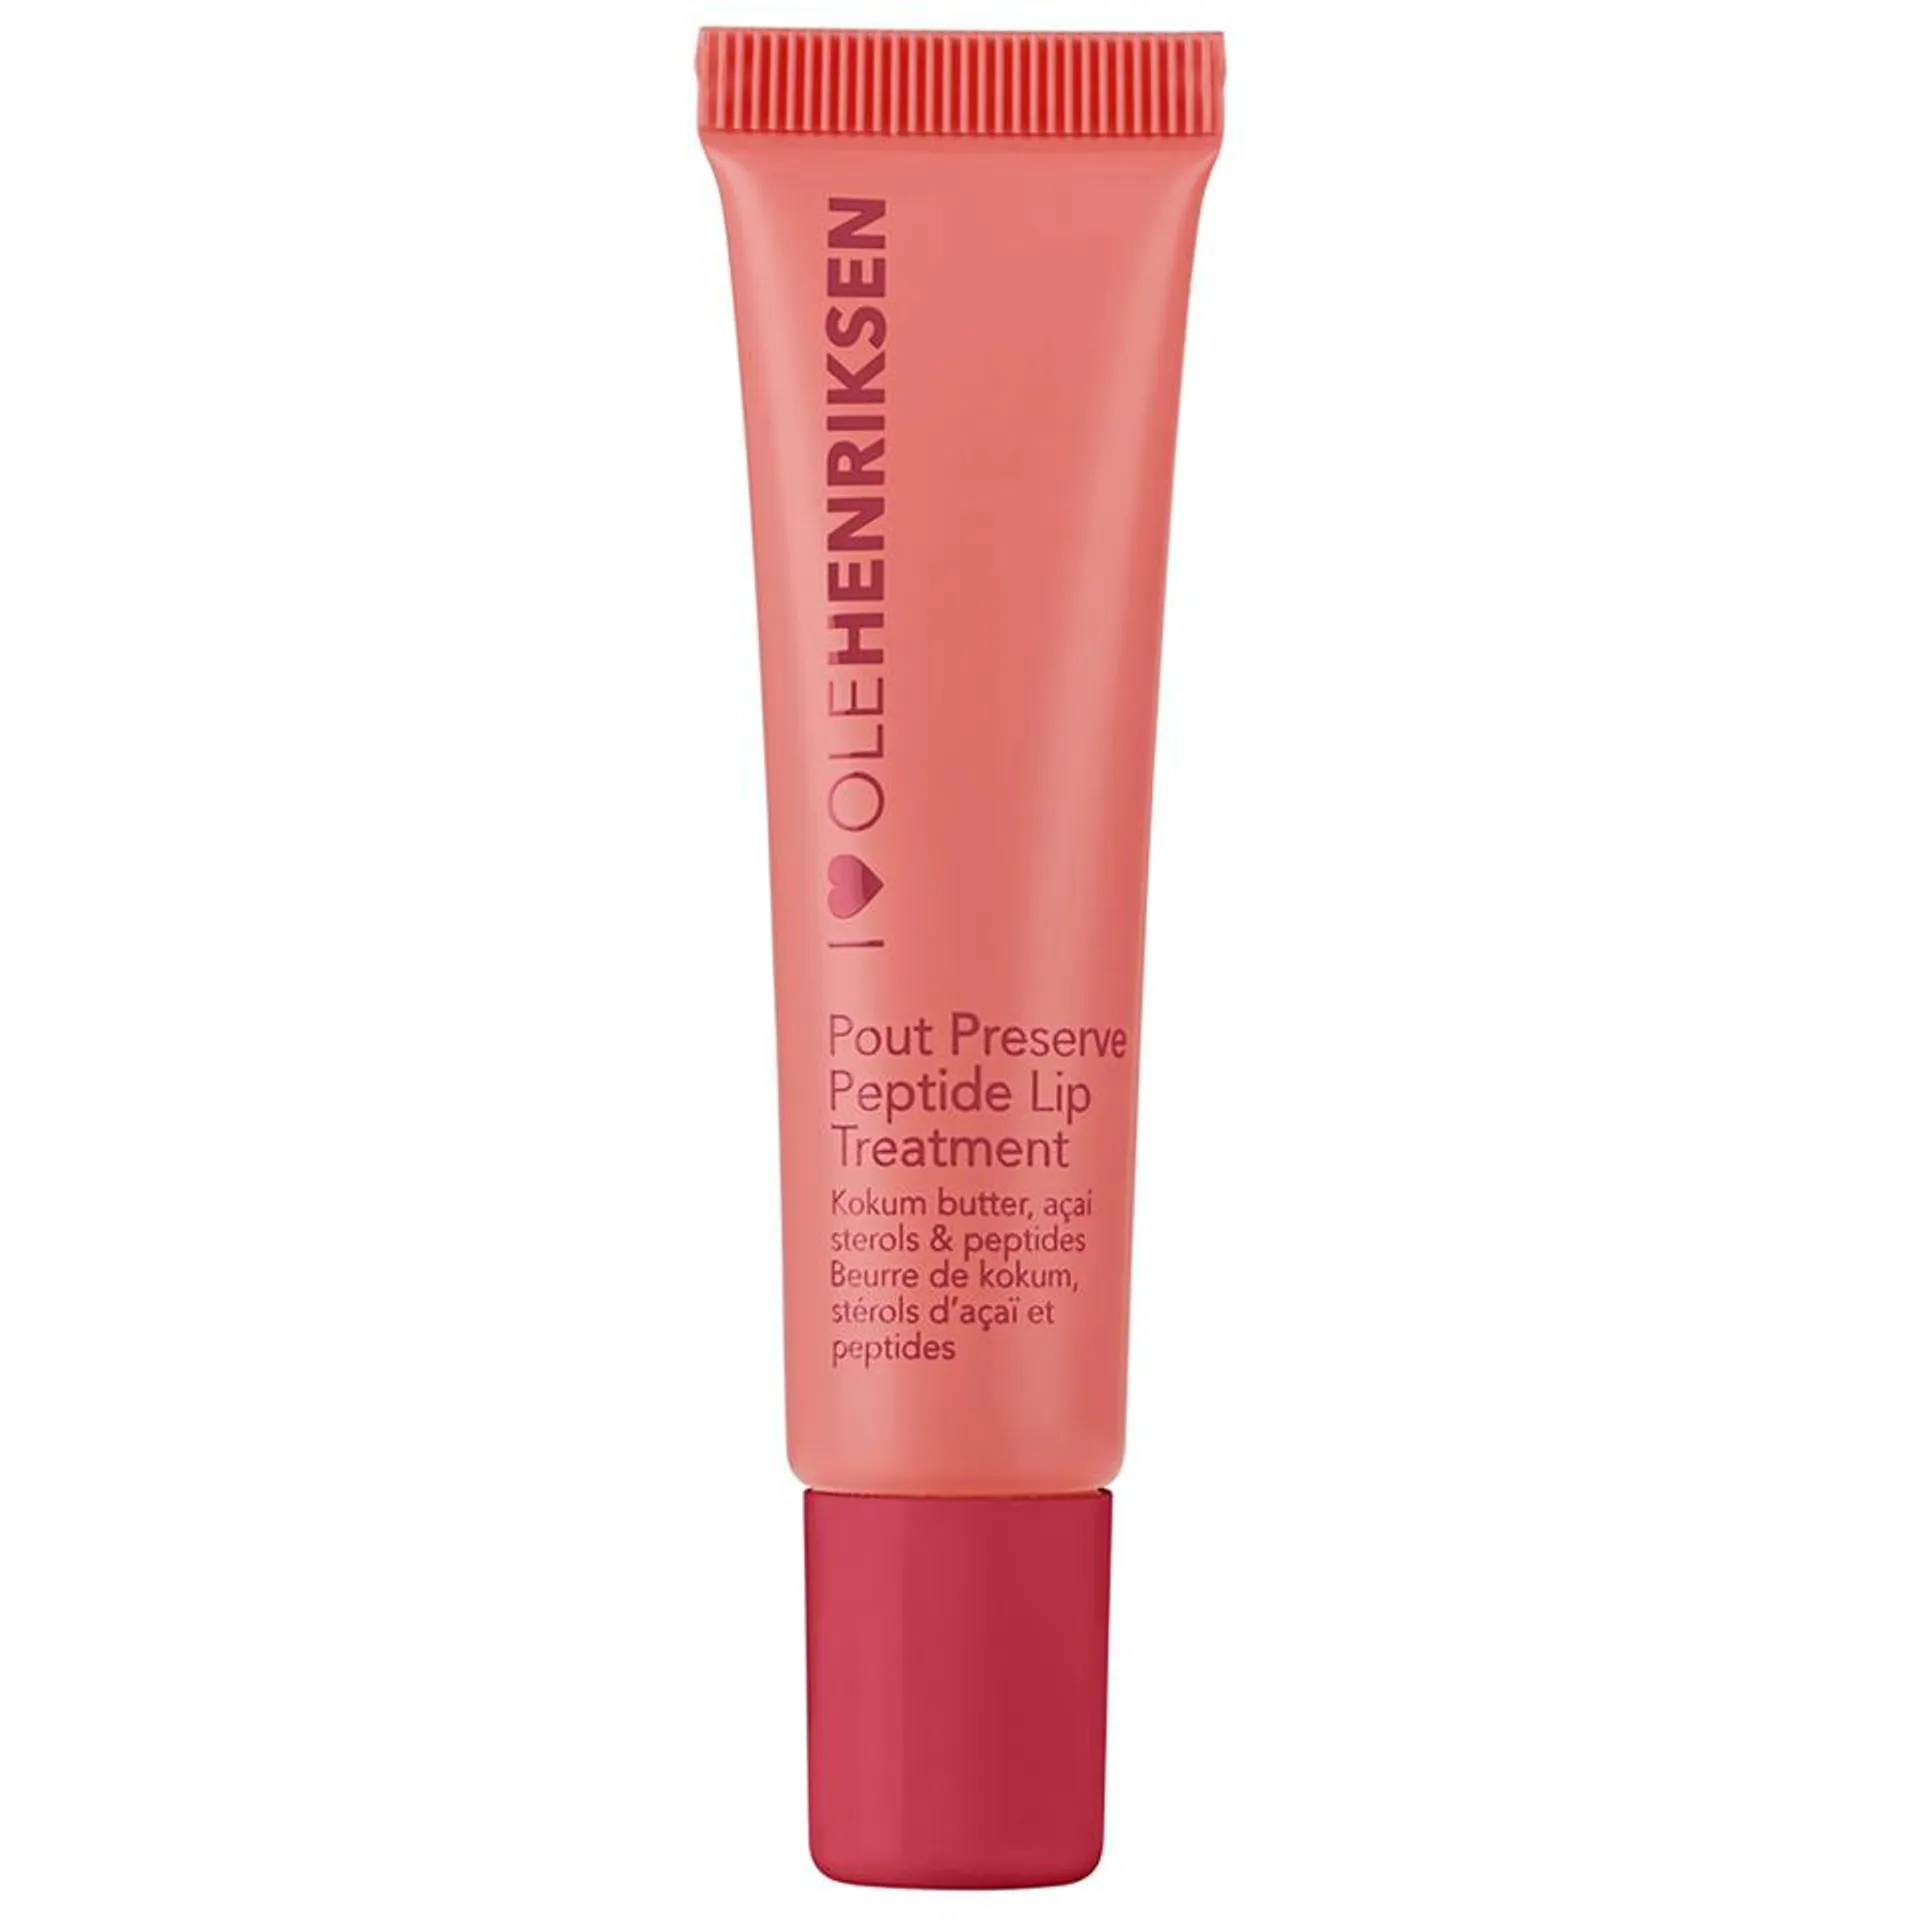 Ole Henriksen Exclusive Pout Preserve Peptide Lip Treatment - Strawberry Sorbet 12ml